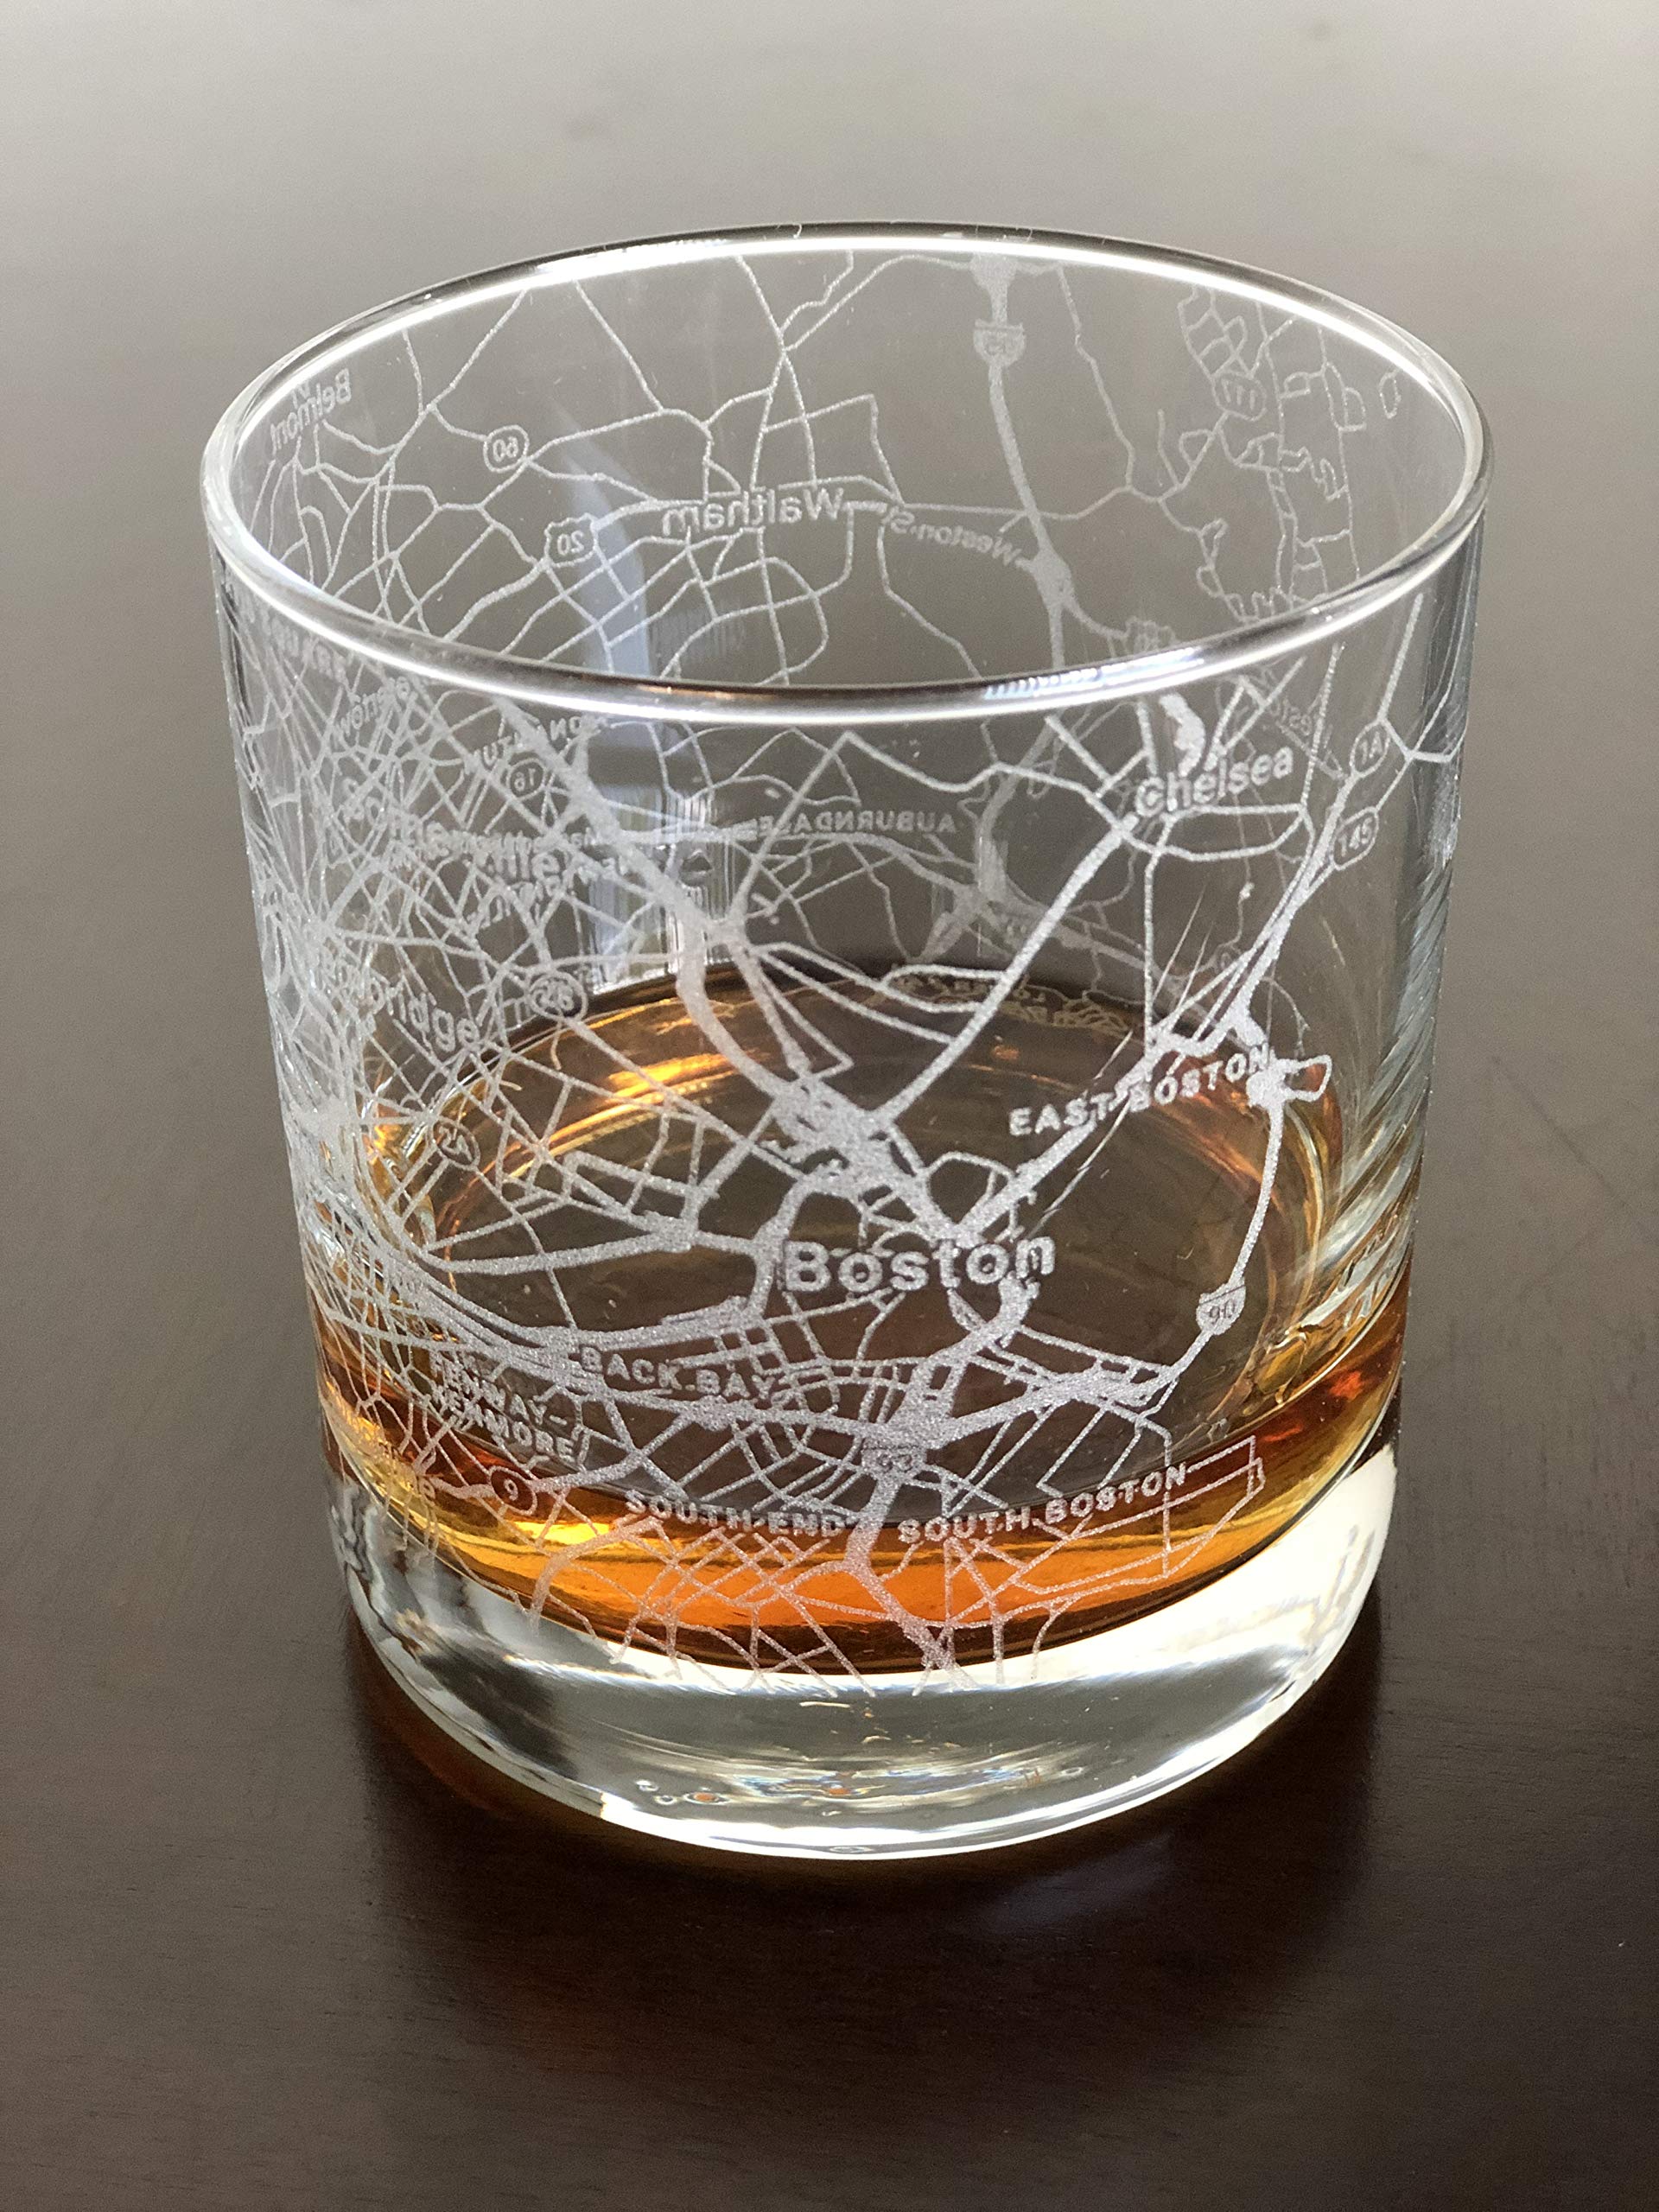 Rocks Whiskey Old Fashioned 11oz Glass Urban City Map Boston Massachusetts